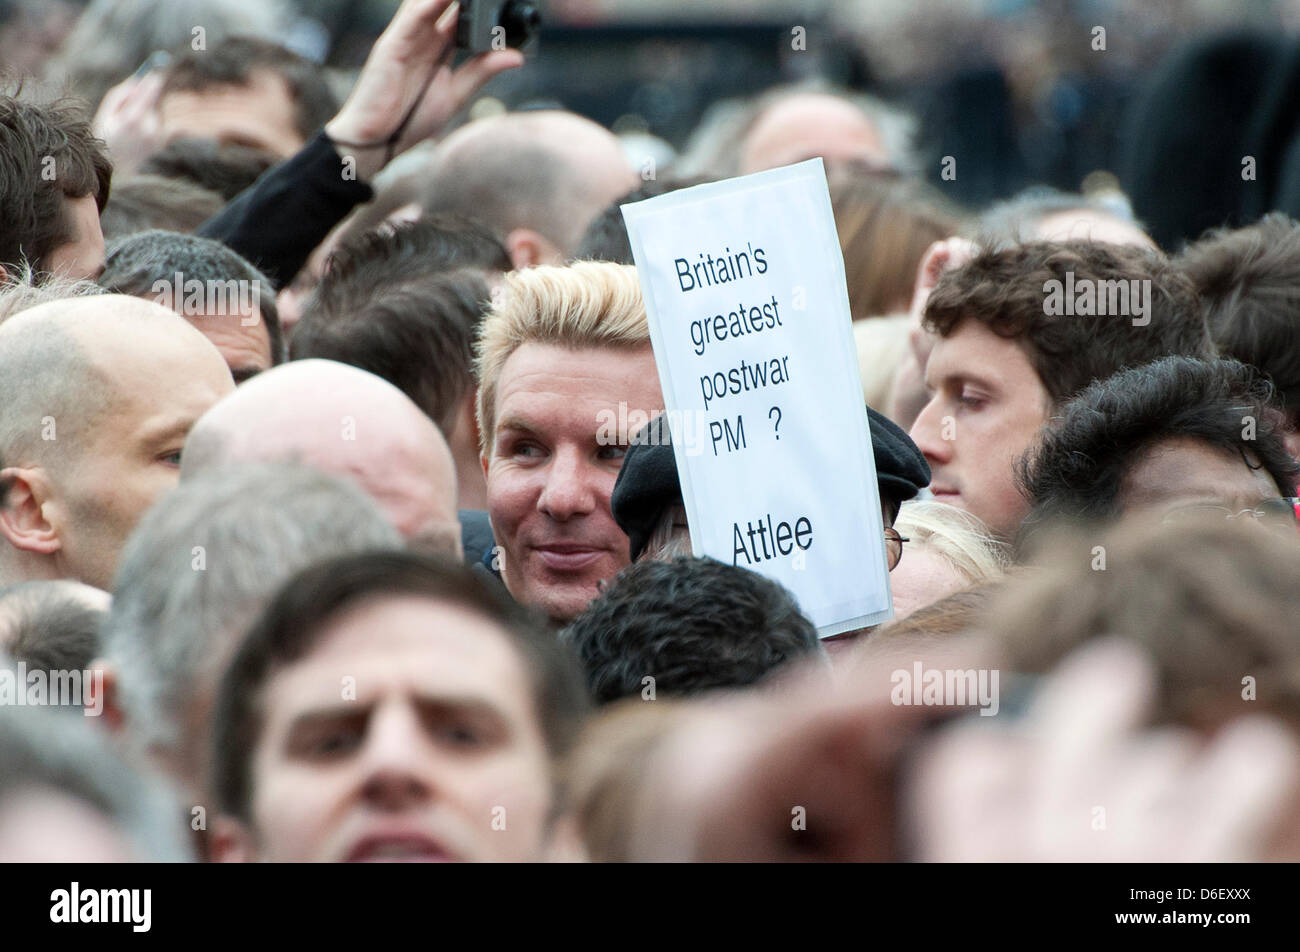 London, UK. 17th April 2013. Anti-Thatcherism printout held aloft during the funeral procession of Baroness Thatcher. Credit: Scott Wishart/Alamy Live News Stock Photo